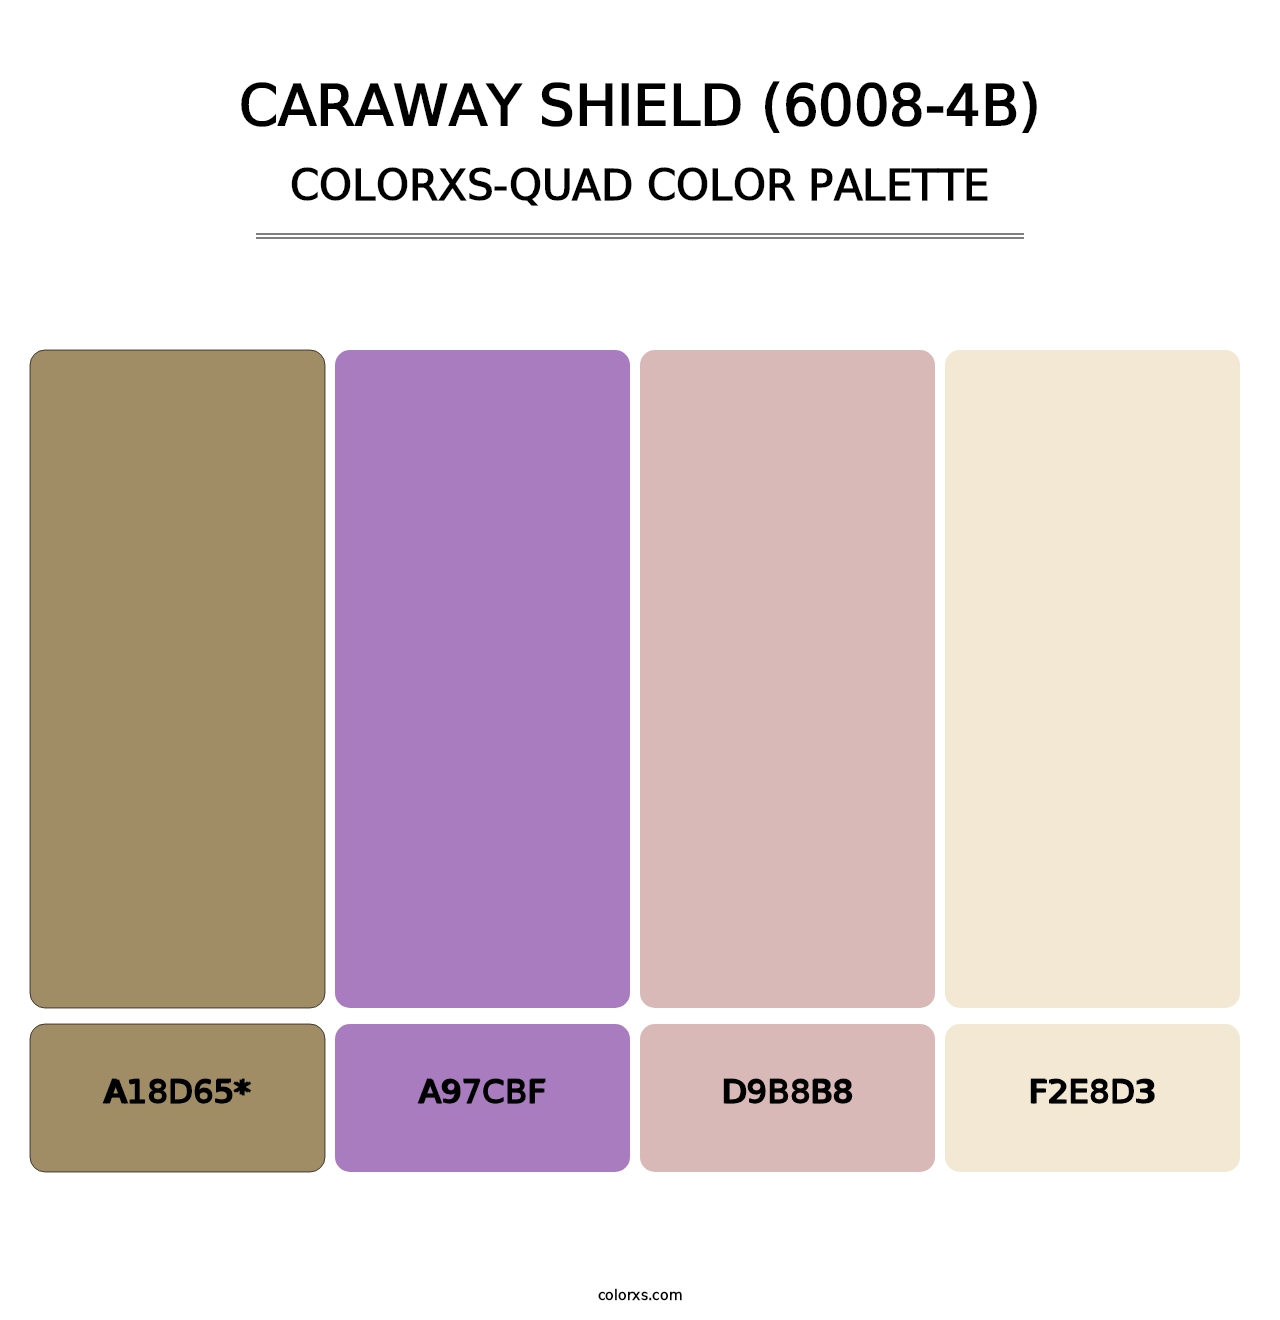 Caraway Shield (6008-4B) - Colorxs Quad Palette